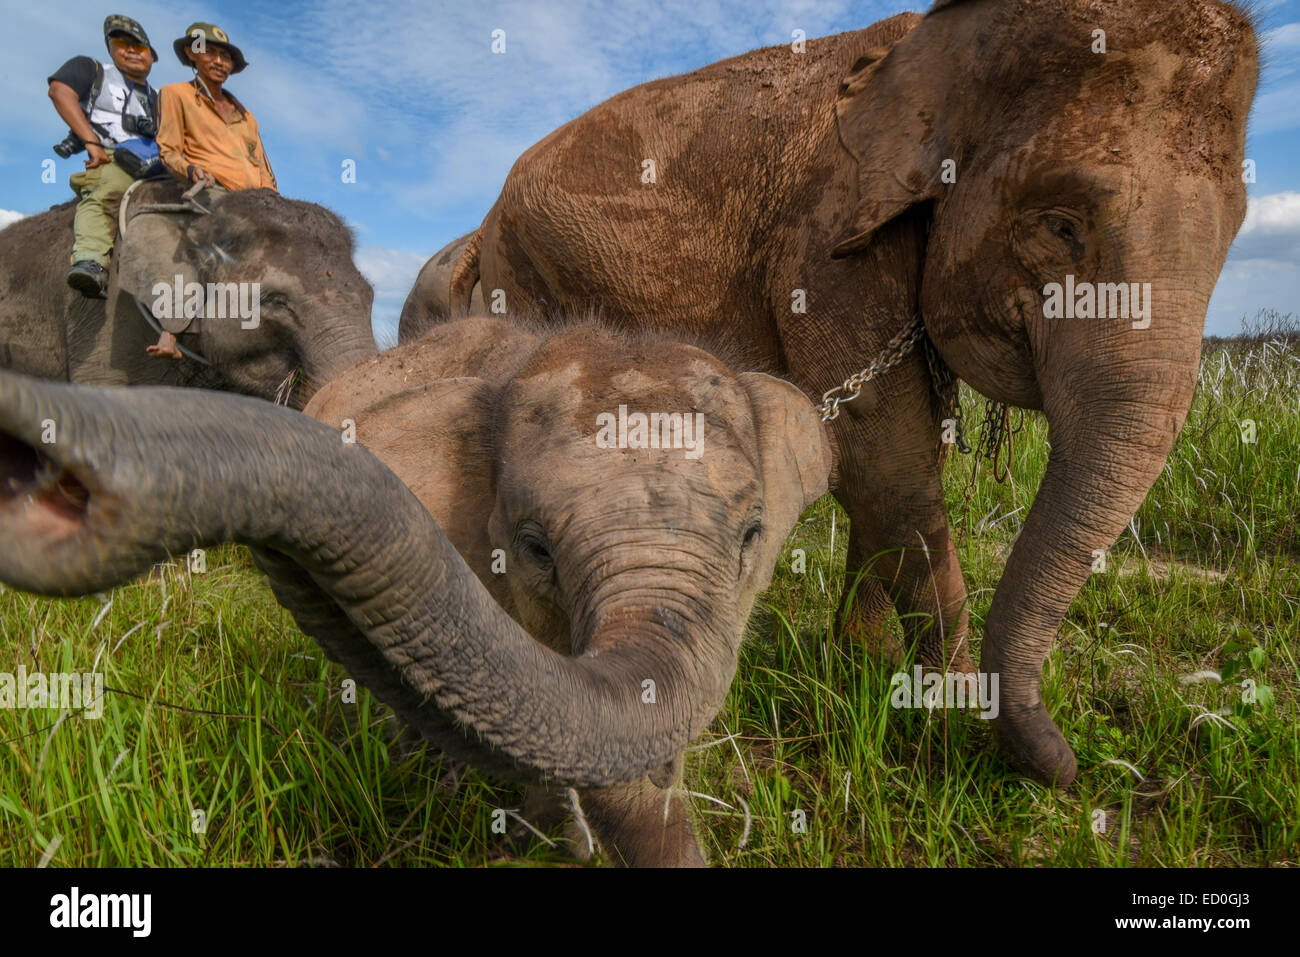 A baby elephant named Amel trying to kiss photographer's lens in Way Kambas National Park, Sumatra, Indonesia. Stock Photo